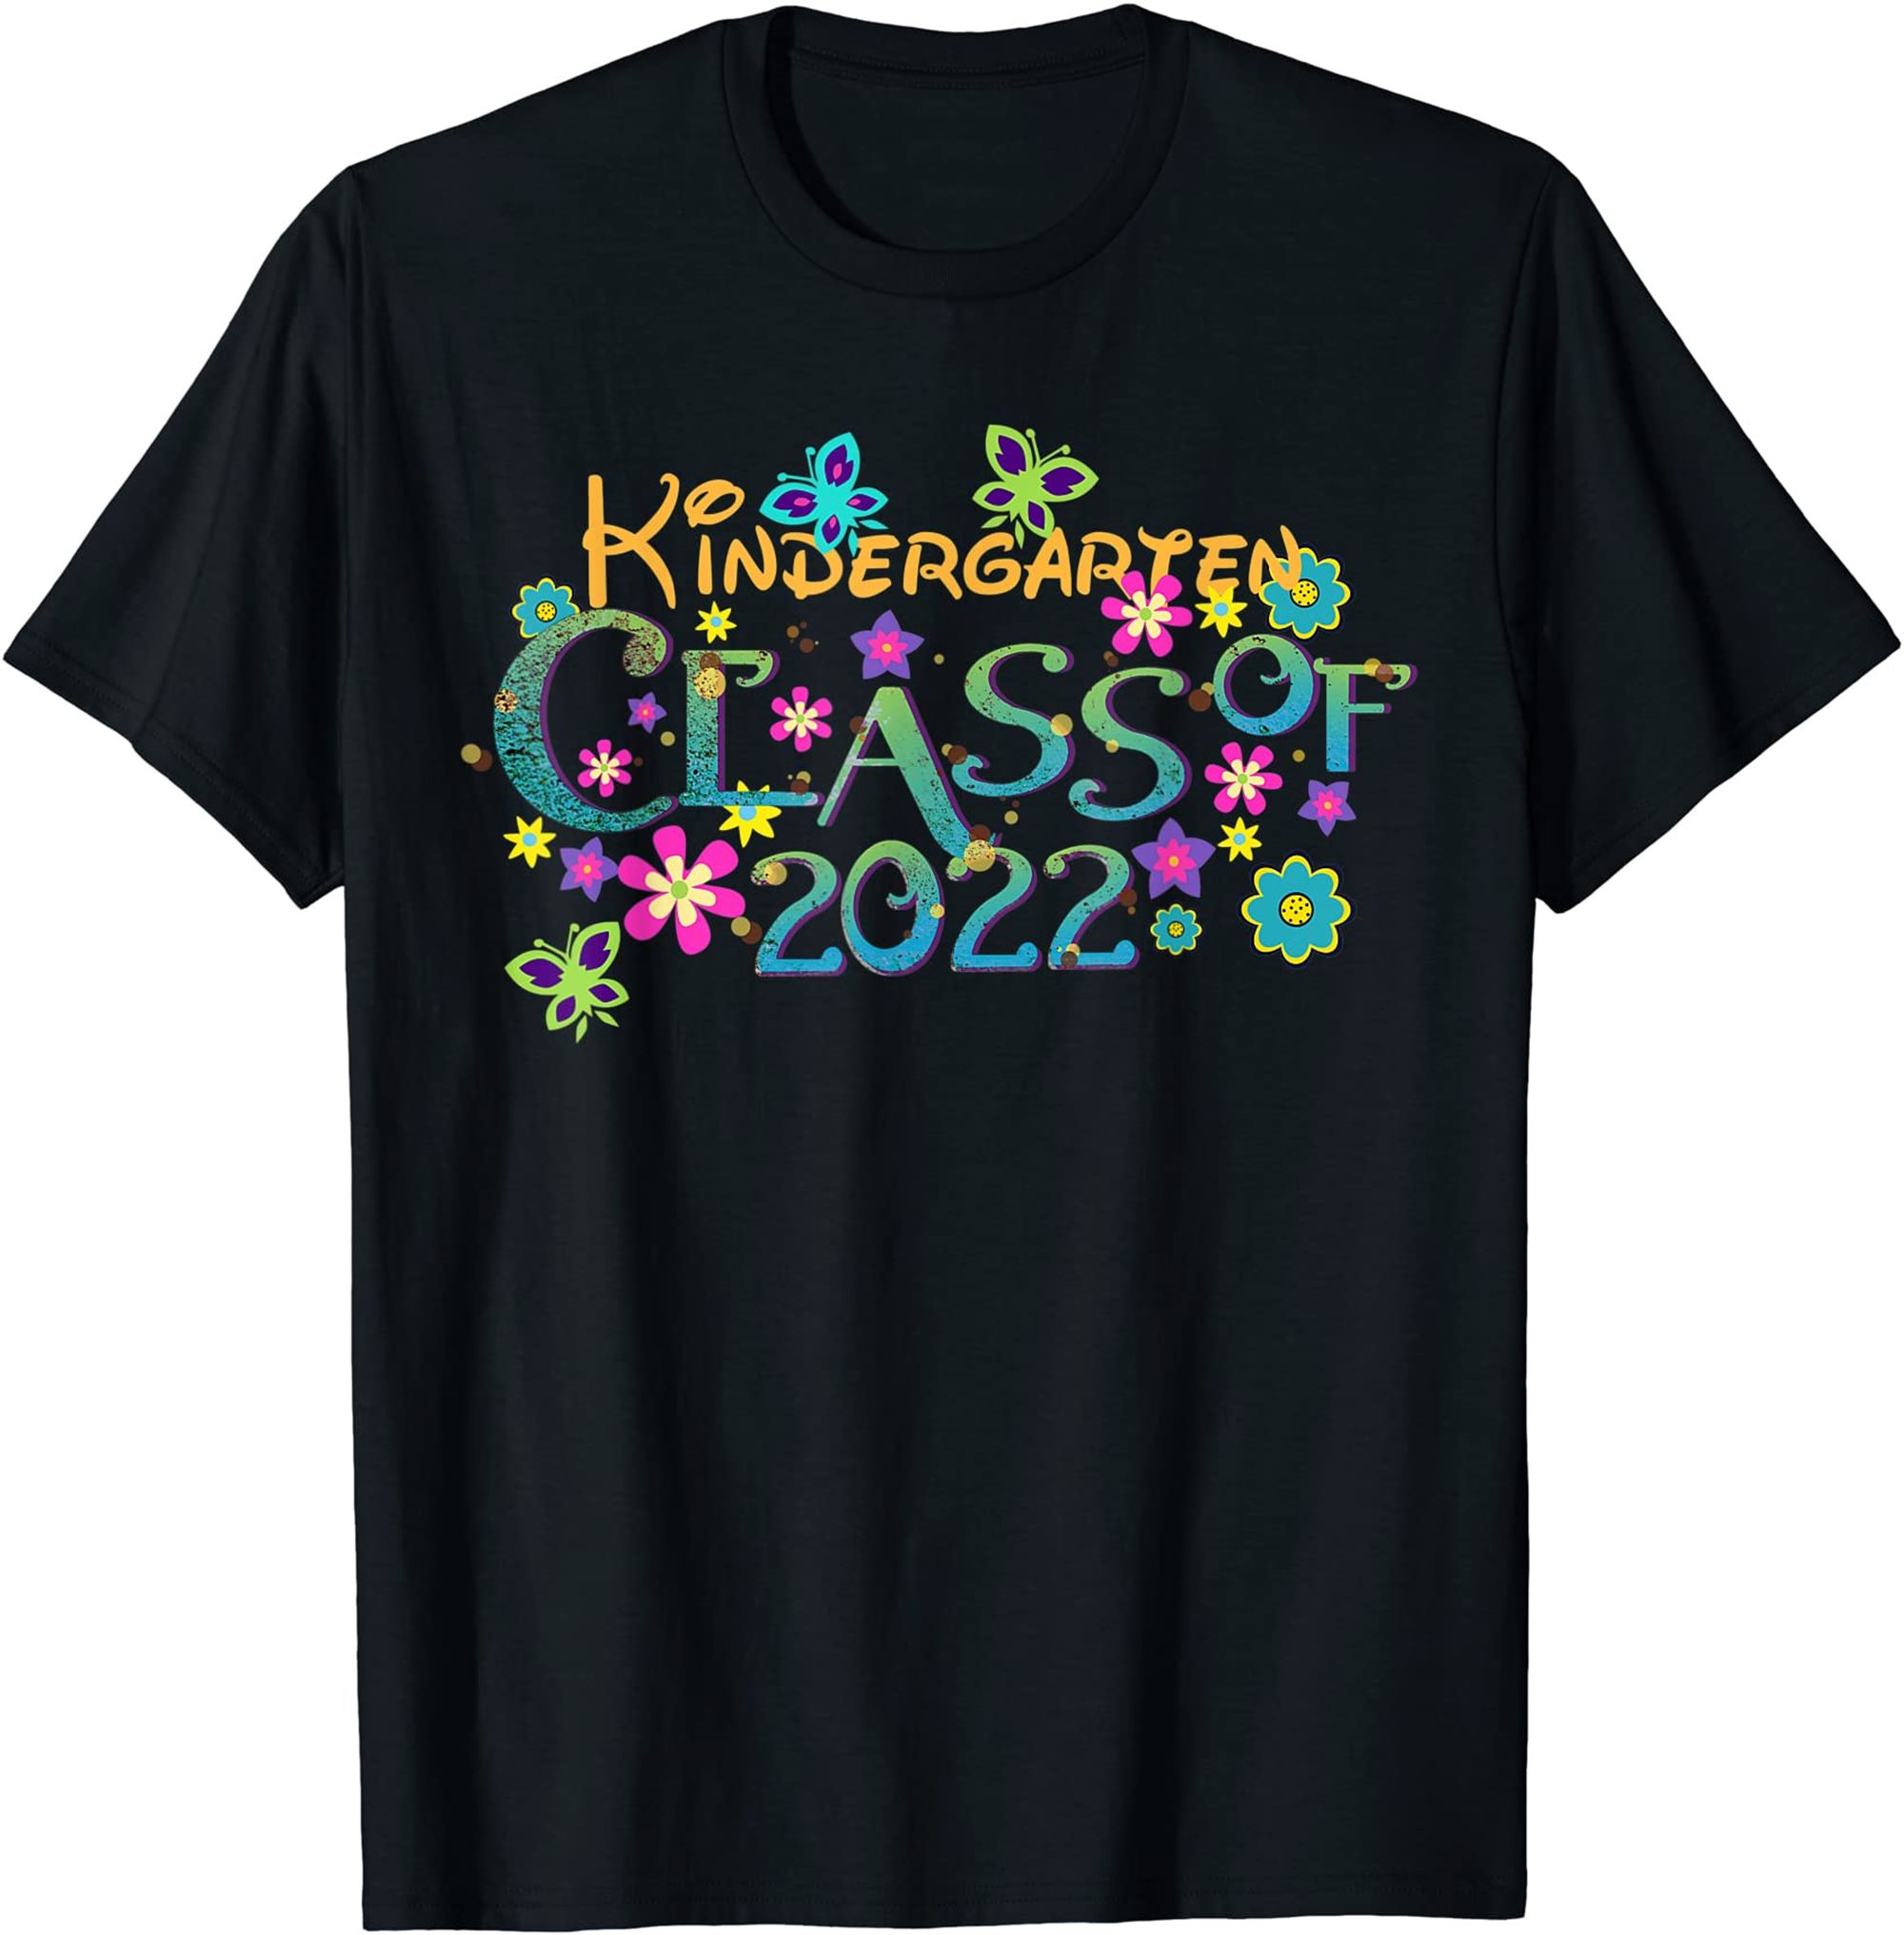 Class 2022 Kindergarten Year Movie Musical Graduate Gift T-shirt Plus Size Up To 5xl